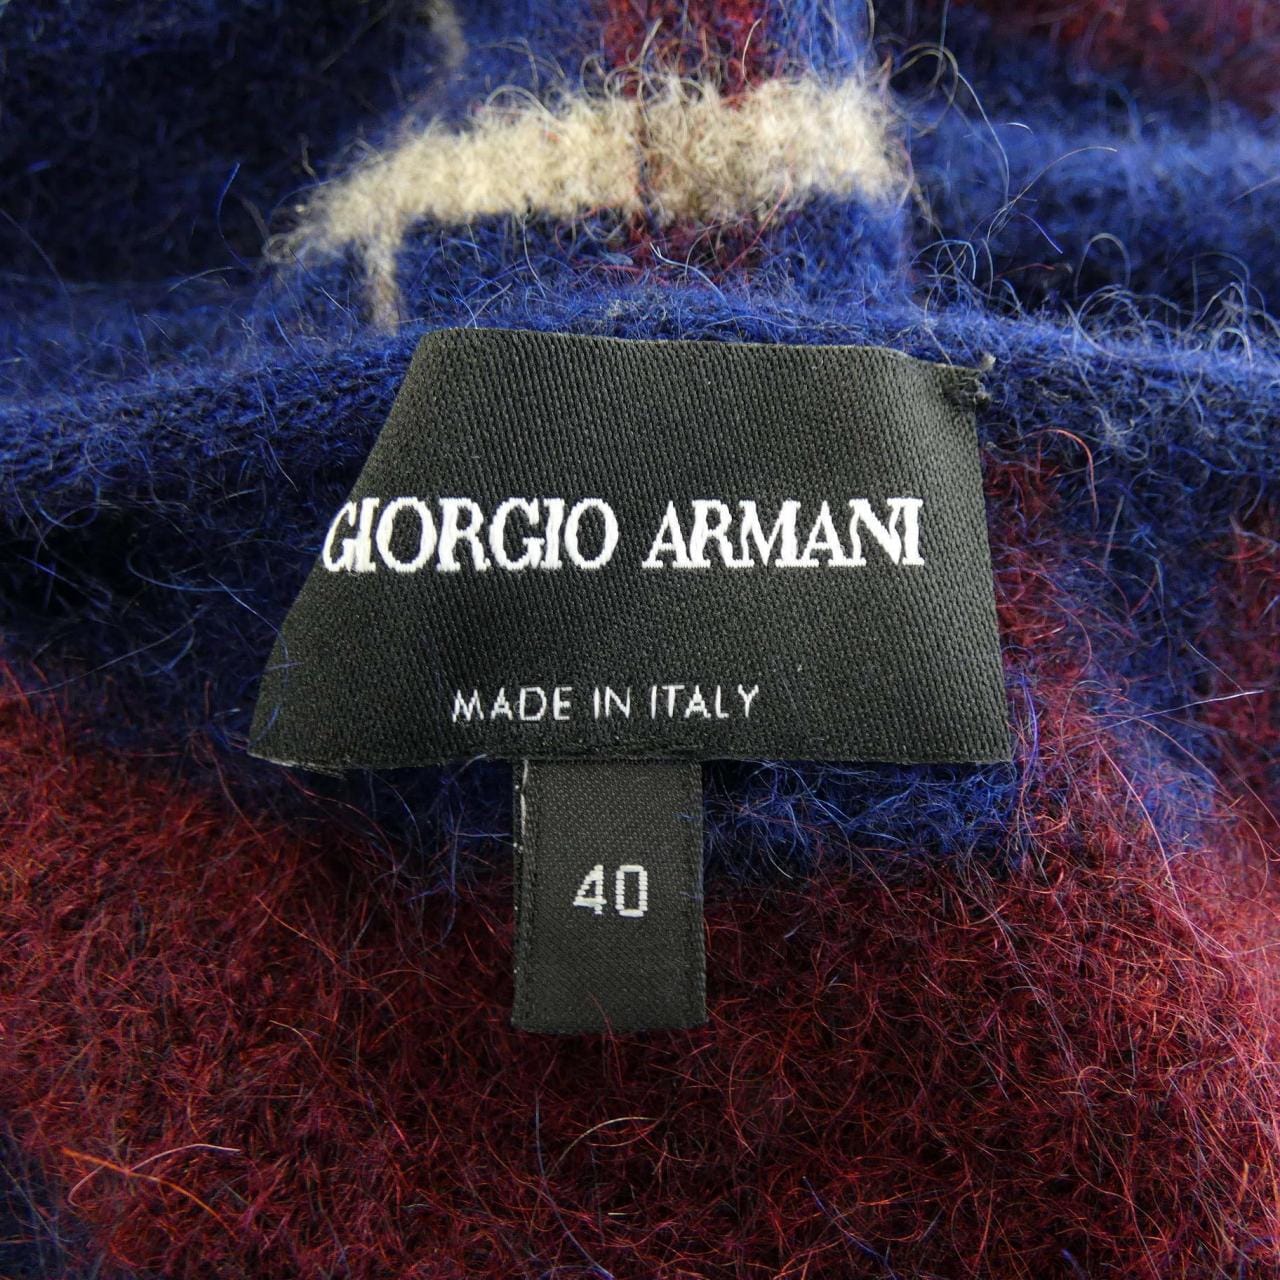 Giorgio Armani GIORGIO ARMANI knit